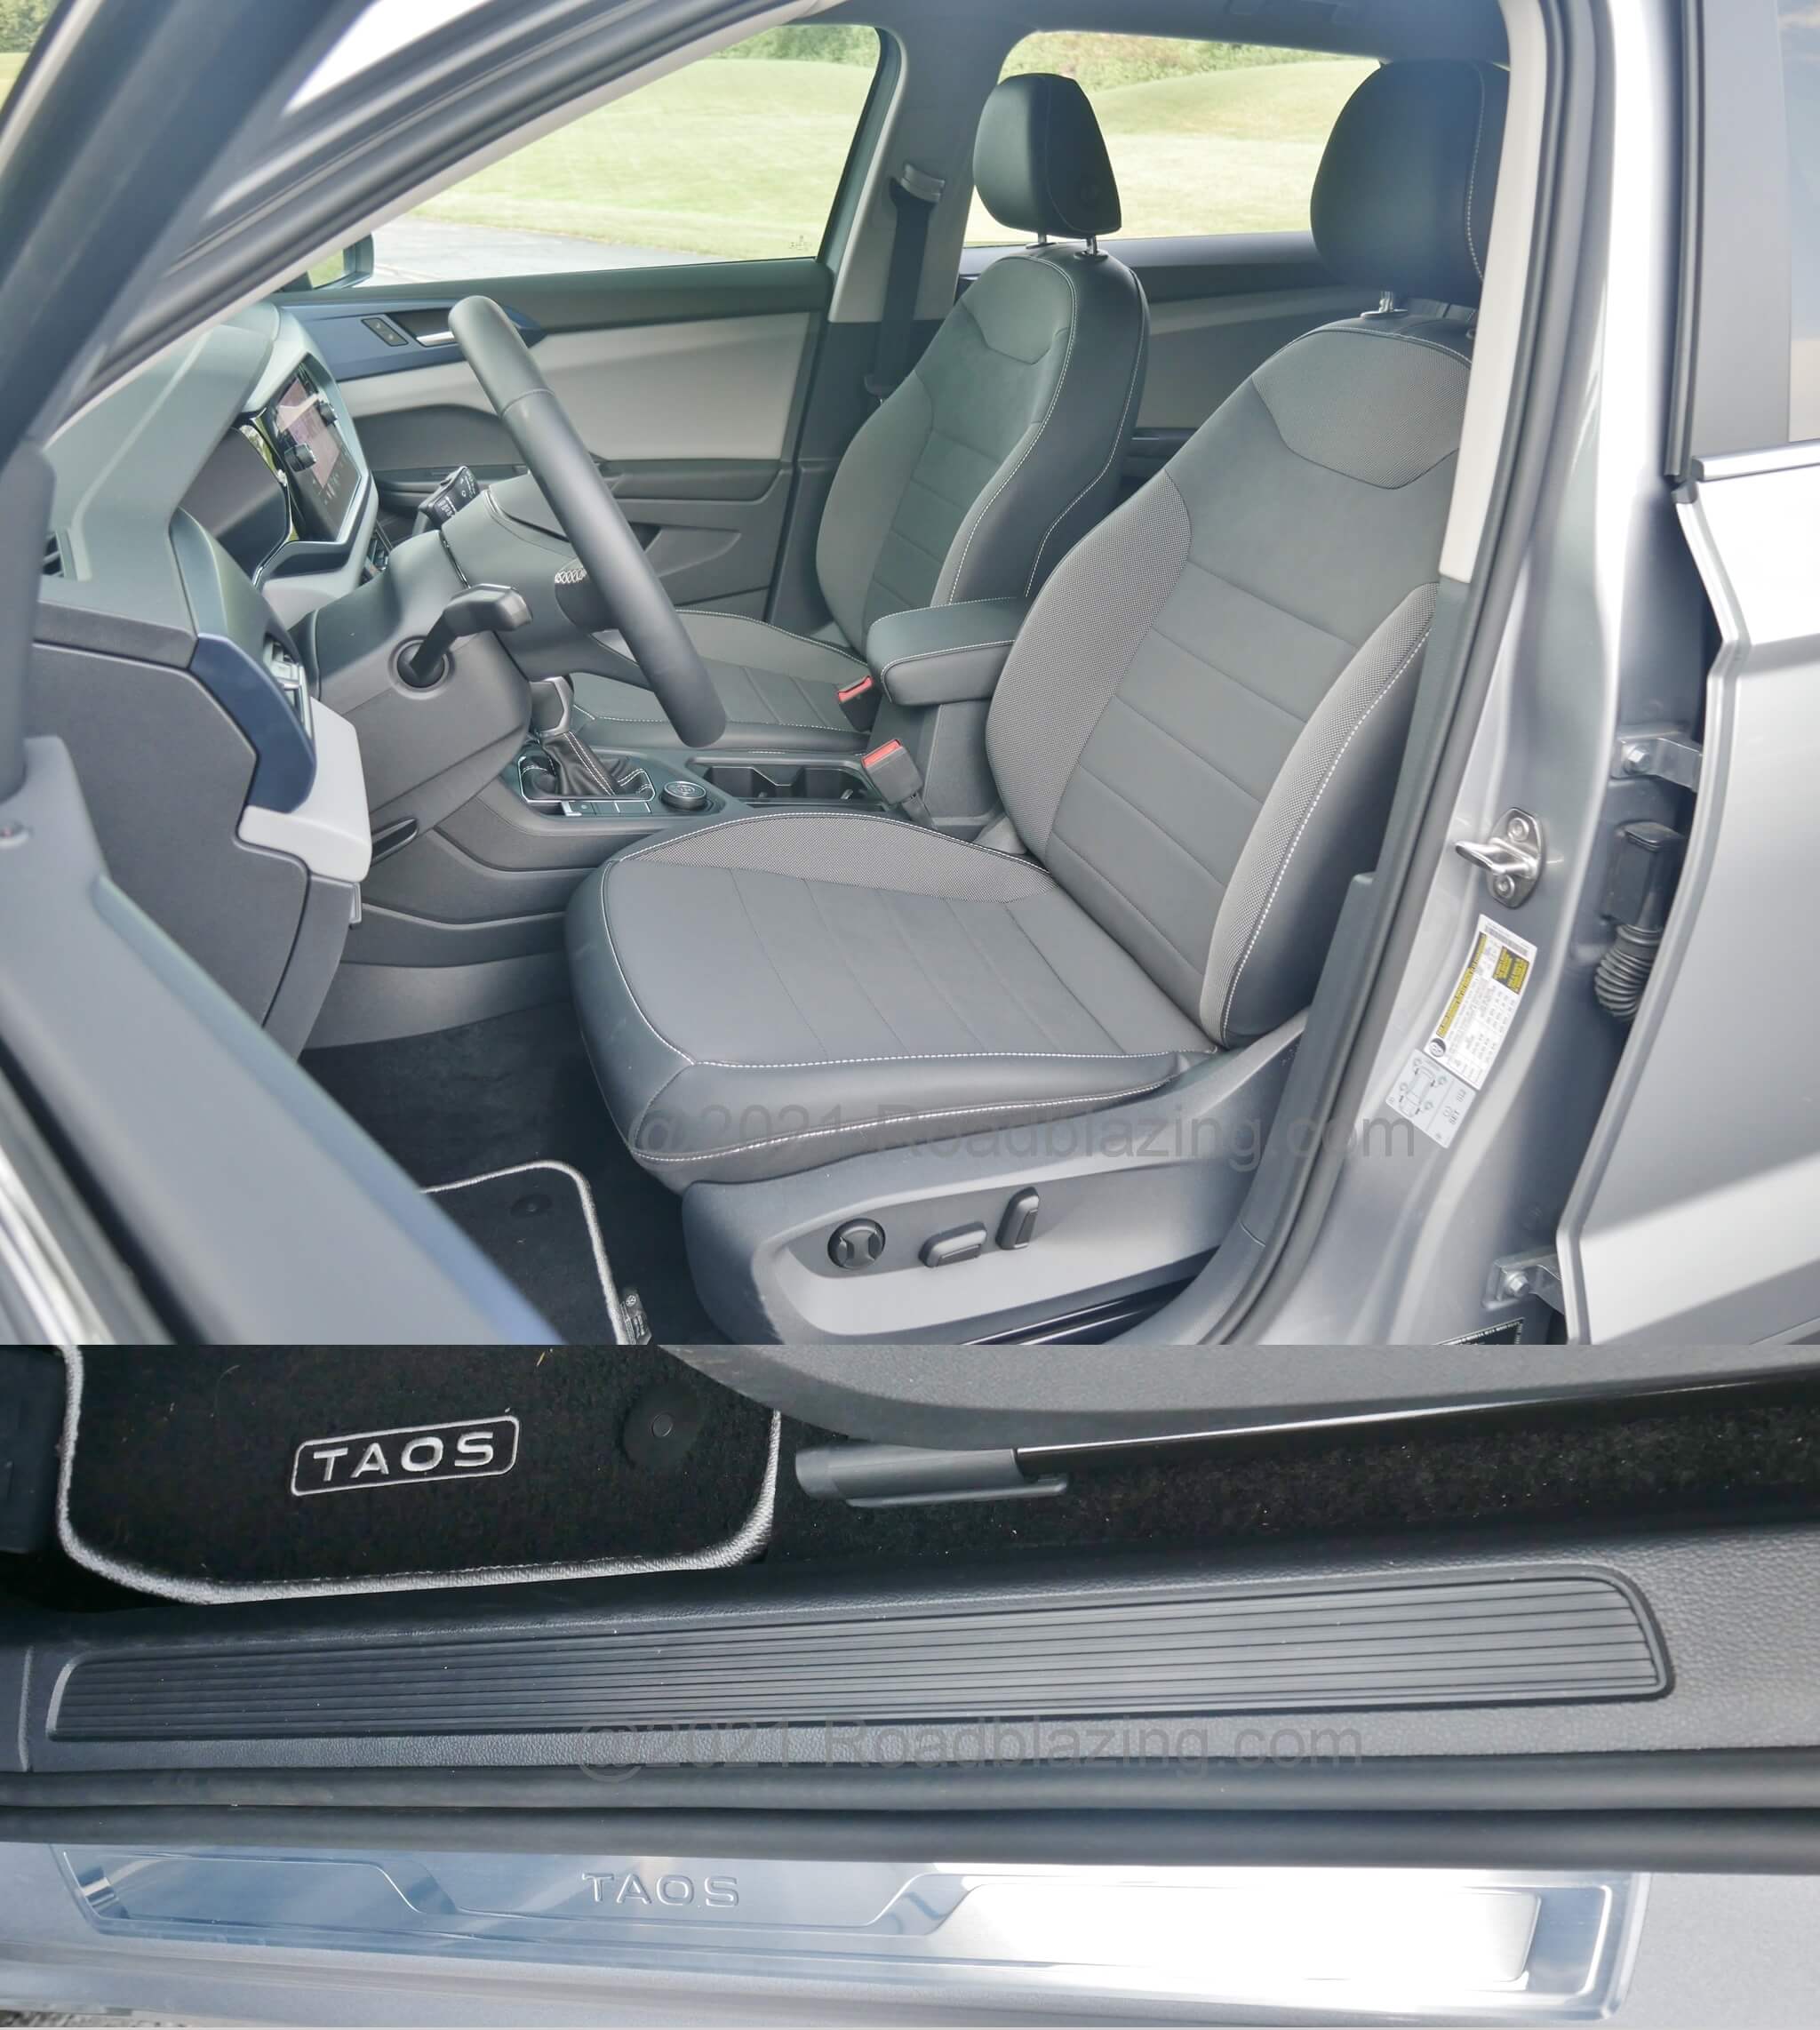 2022 Volkswagen Taos SE 4Motion: 6-way power driver's seat; "TAOS" lettering on rocker panel